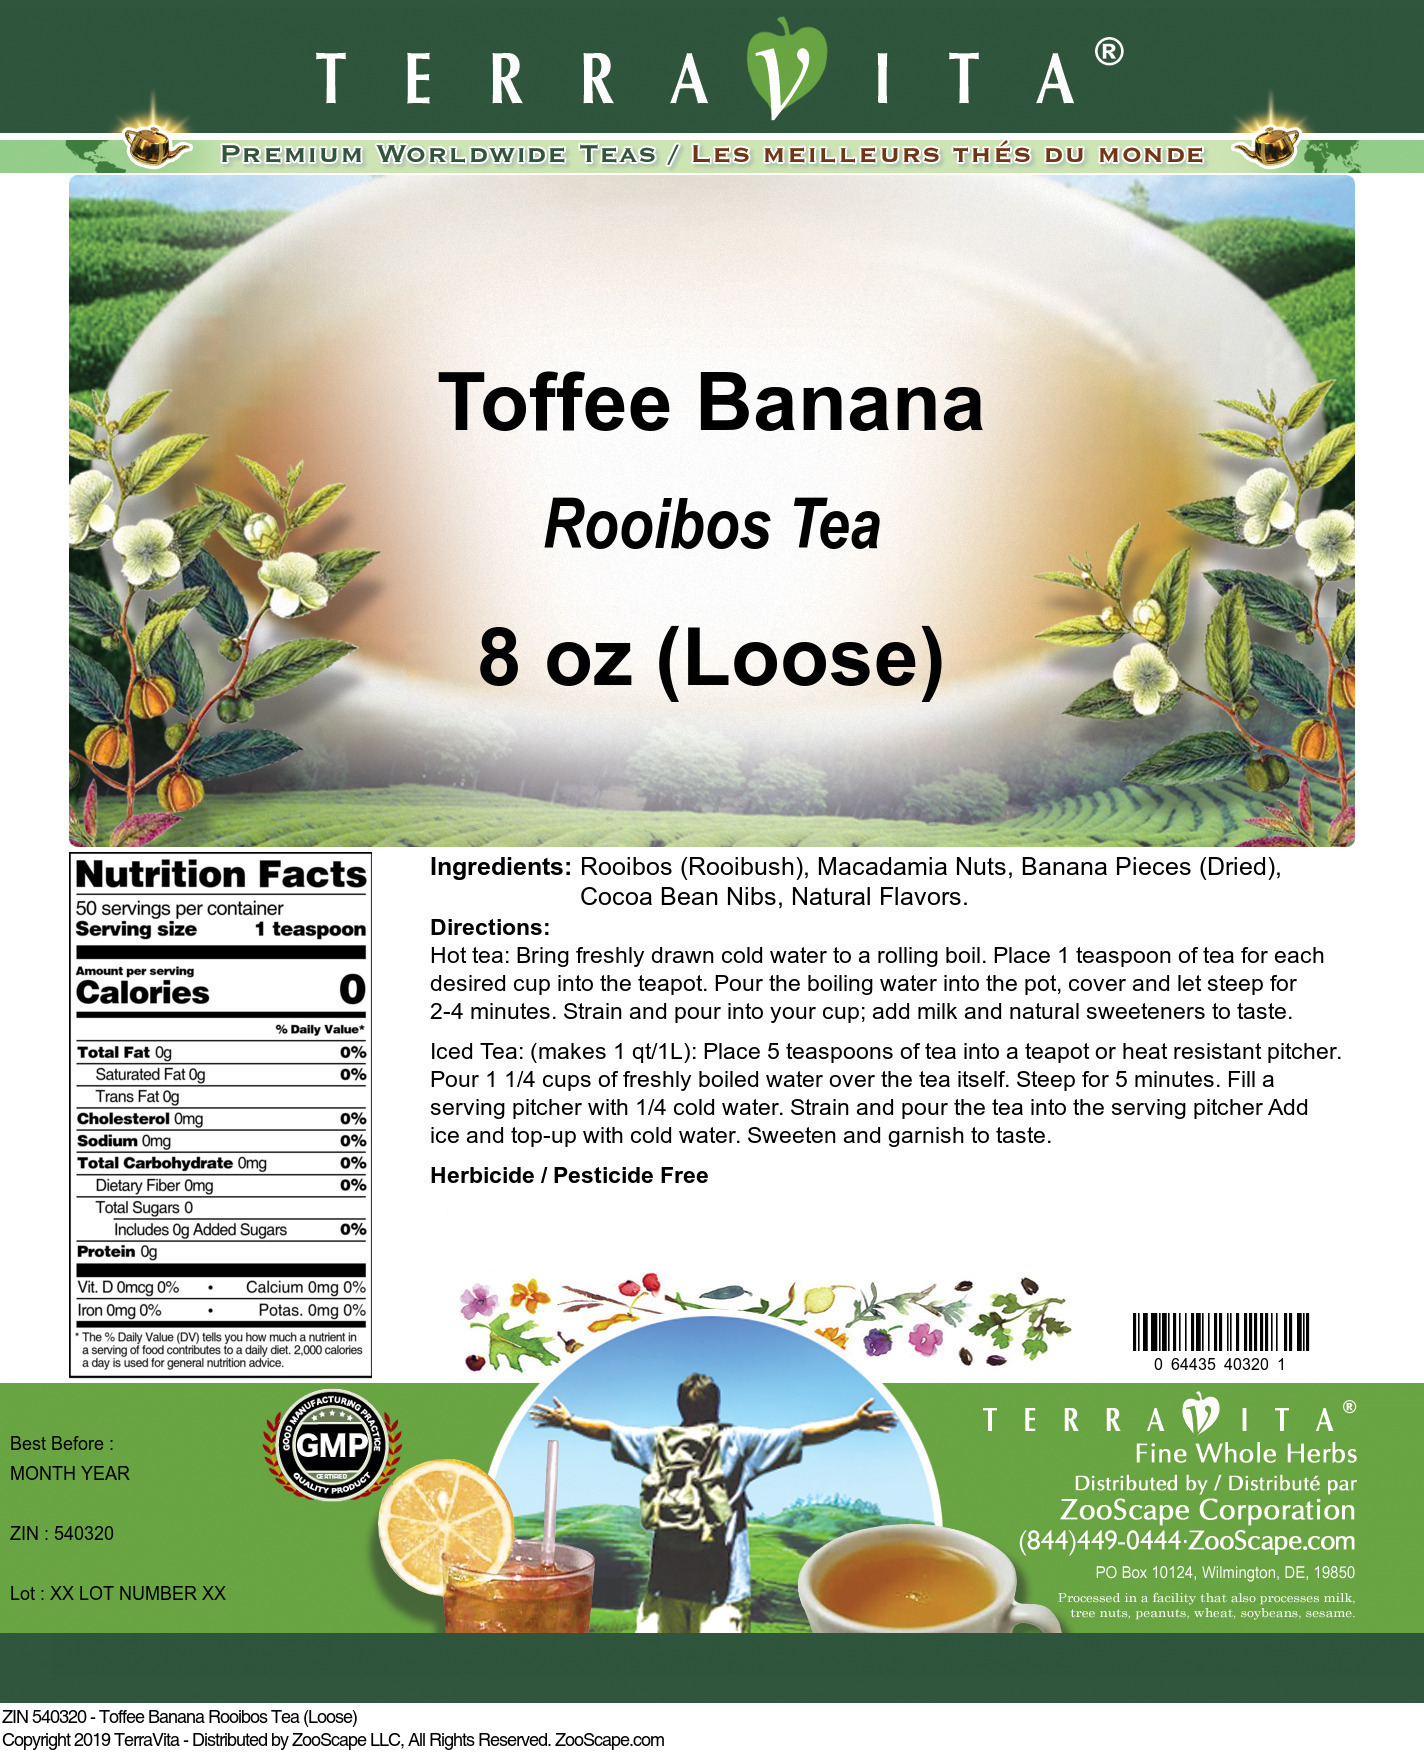 Toffee Banana Rooibos Tea (Loose) - Label